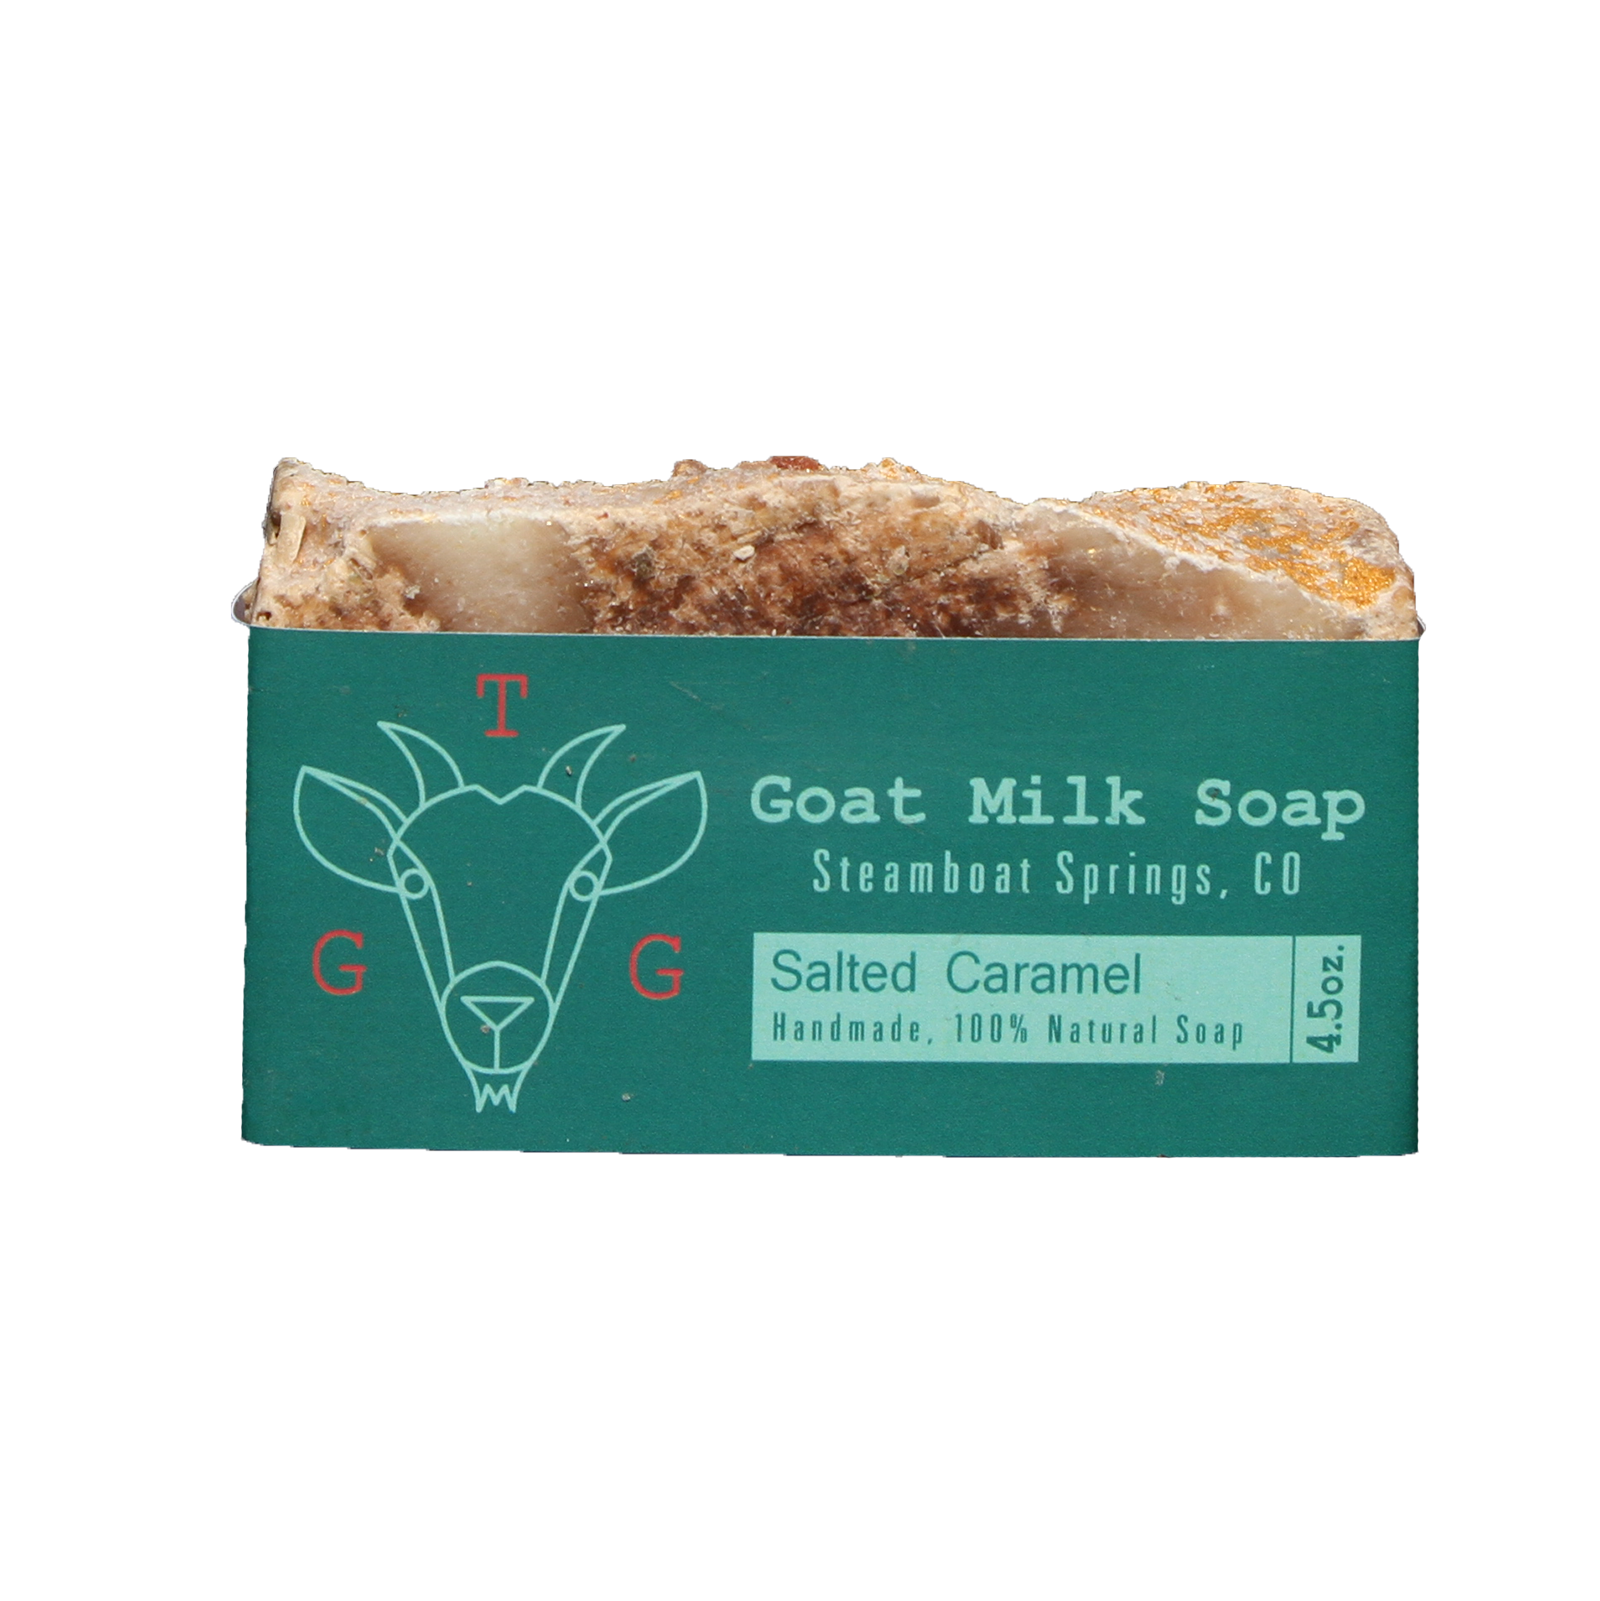 Salted Caramel goat milk soap